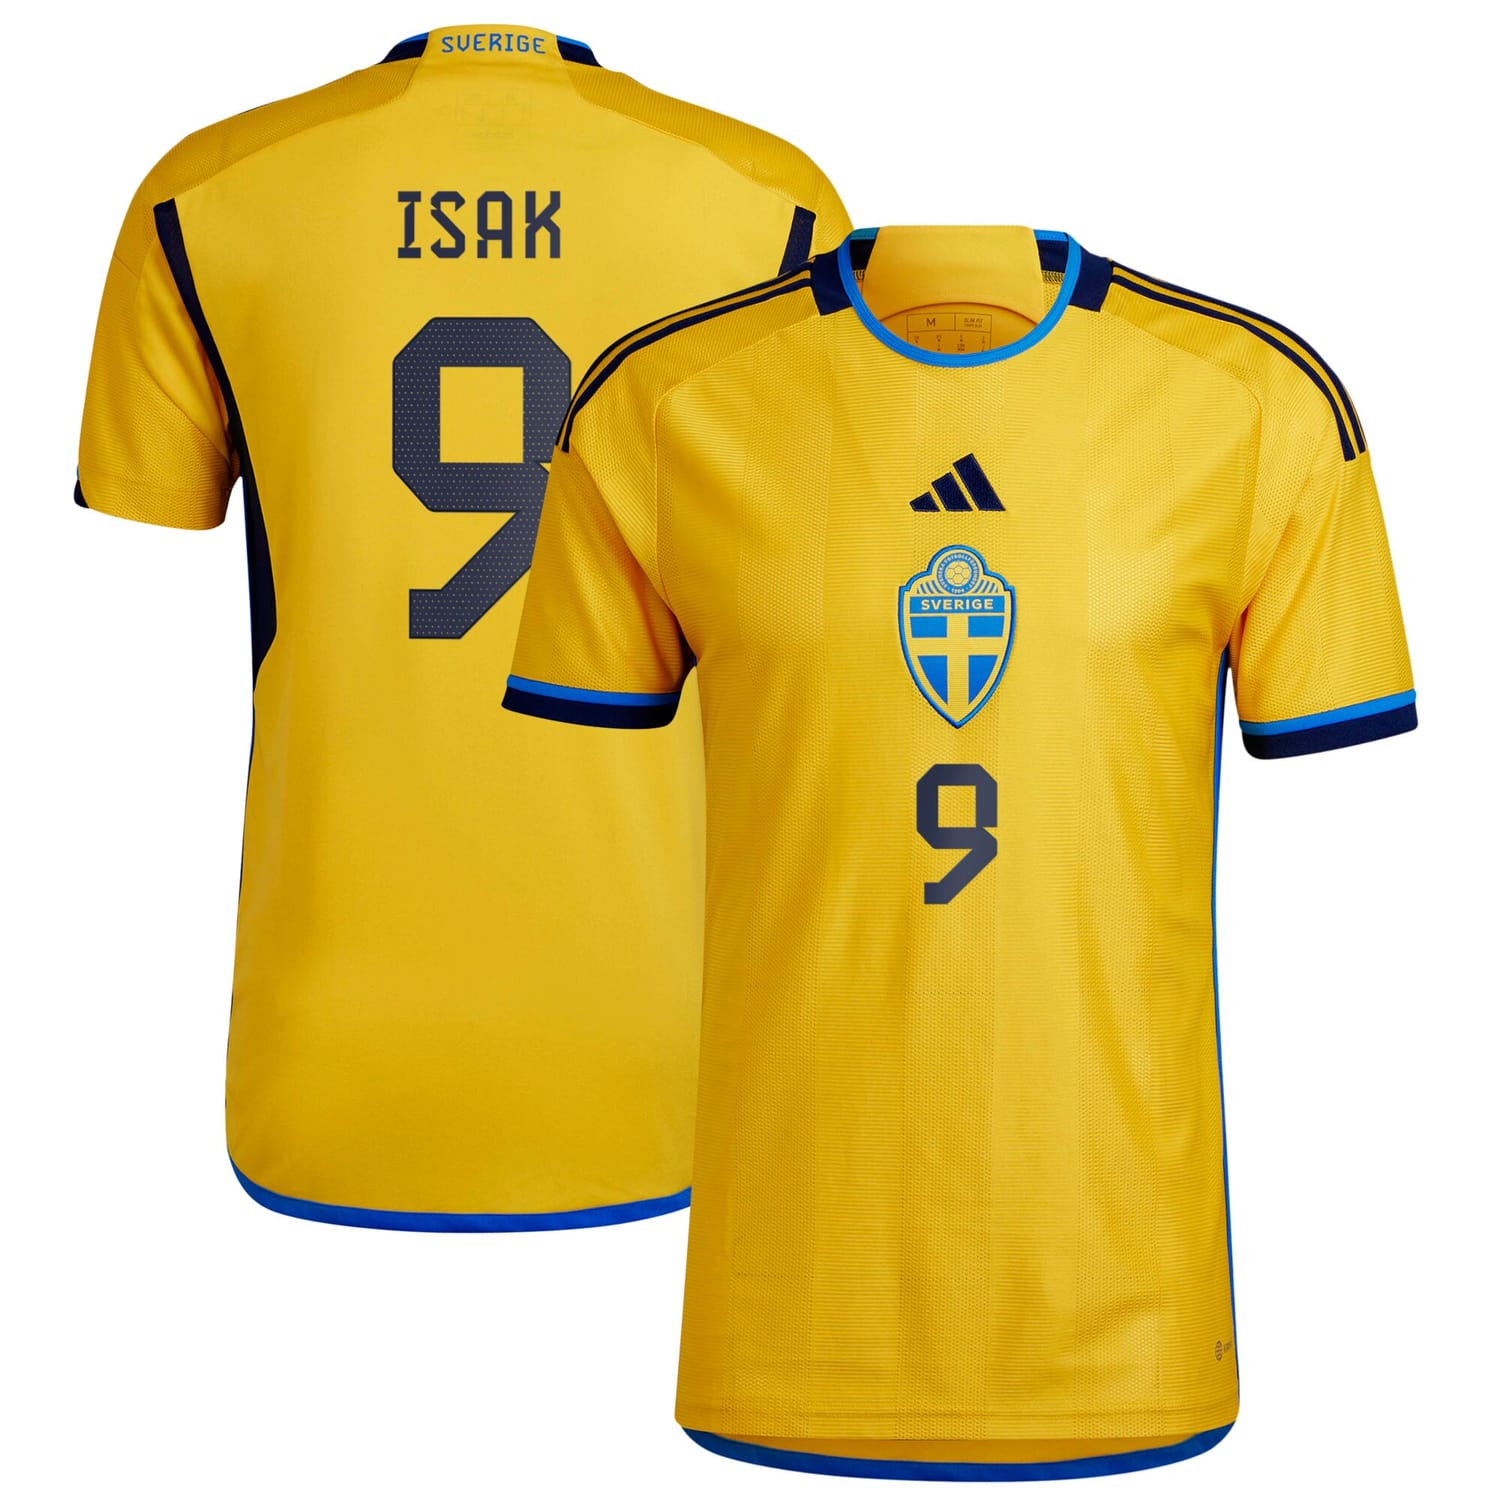 Sweden National Team Home Jersey Shirt player Isak 9 printing for Men